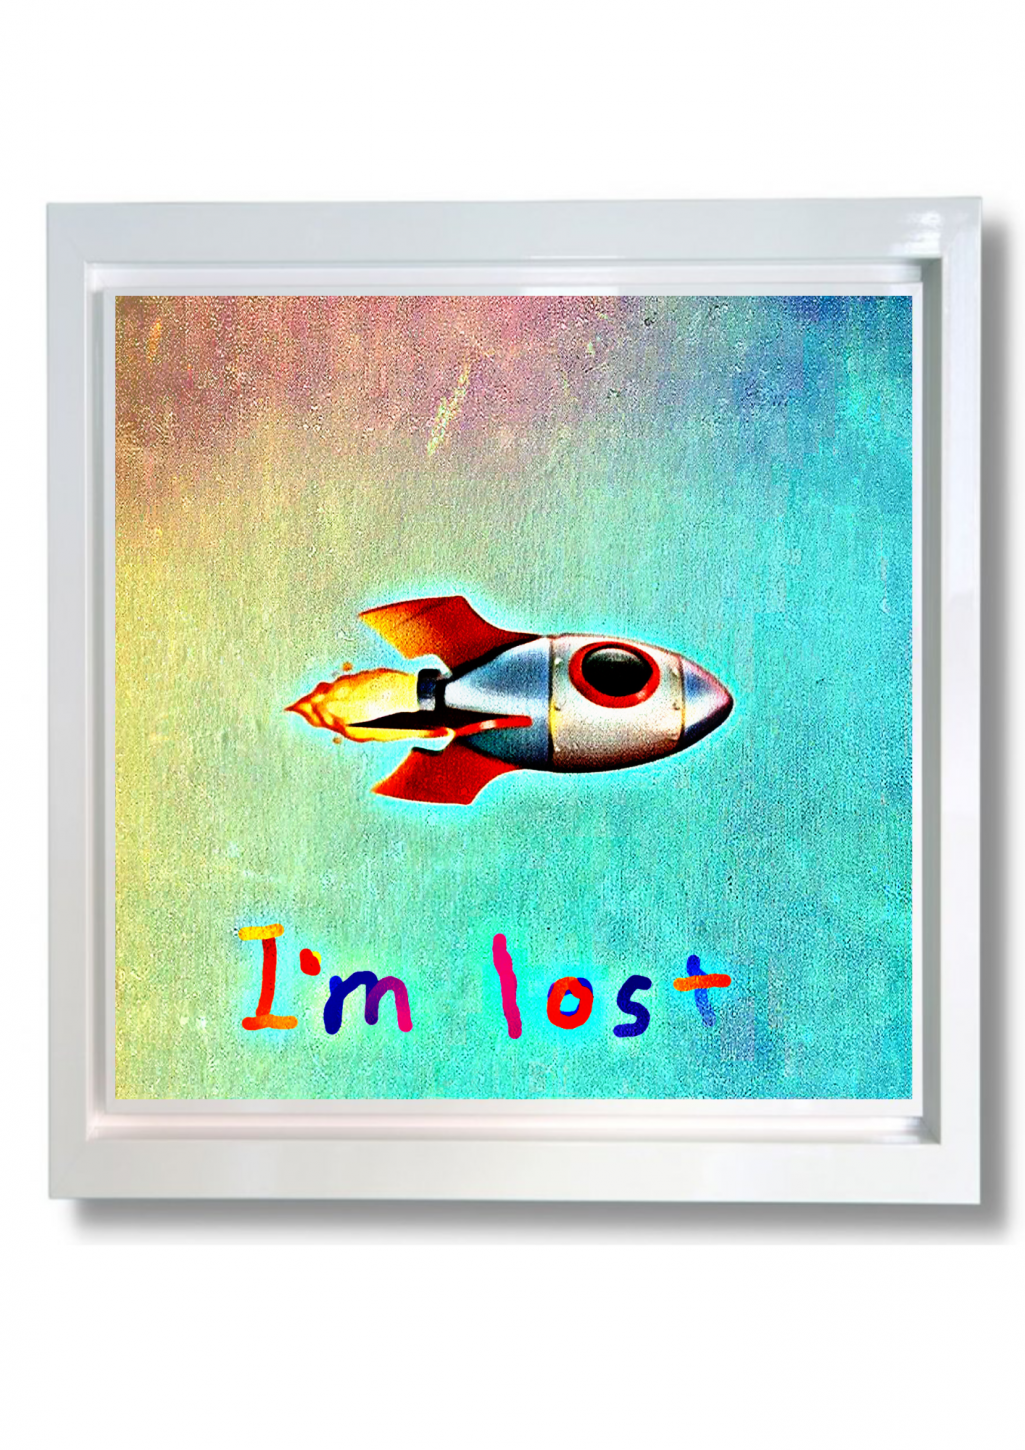 Alex Echo - 'I'm Lost' -  Framed Limited Edition